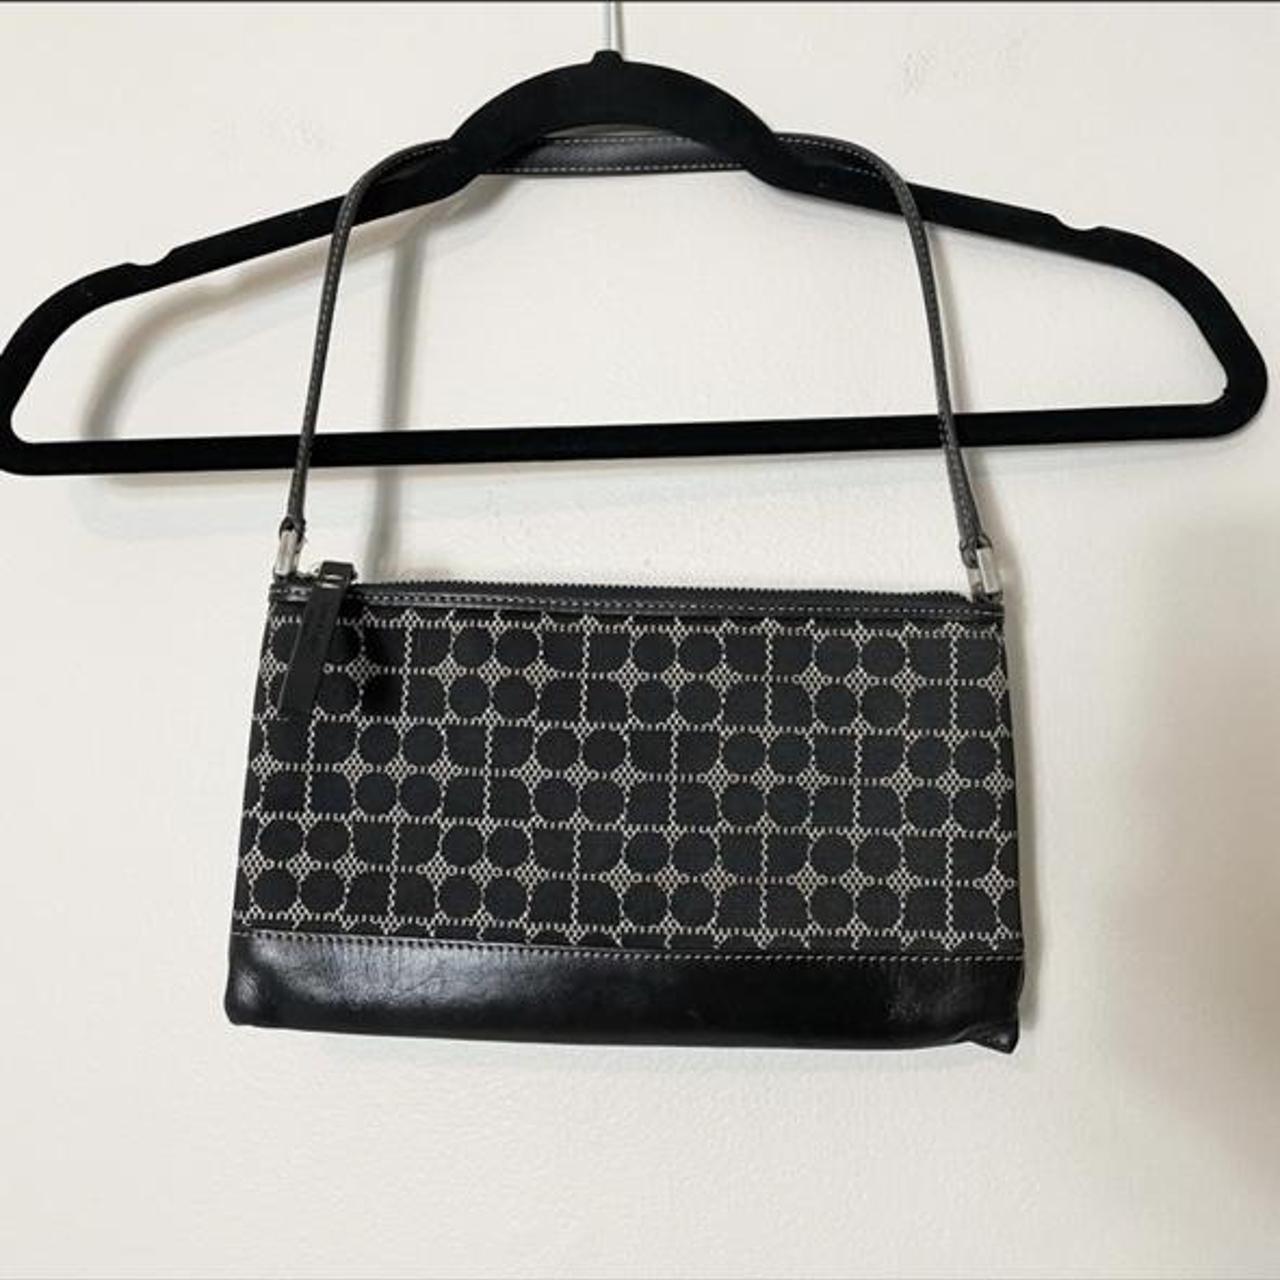 Handbag Sale | Kate Spade New York